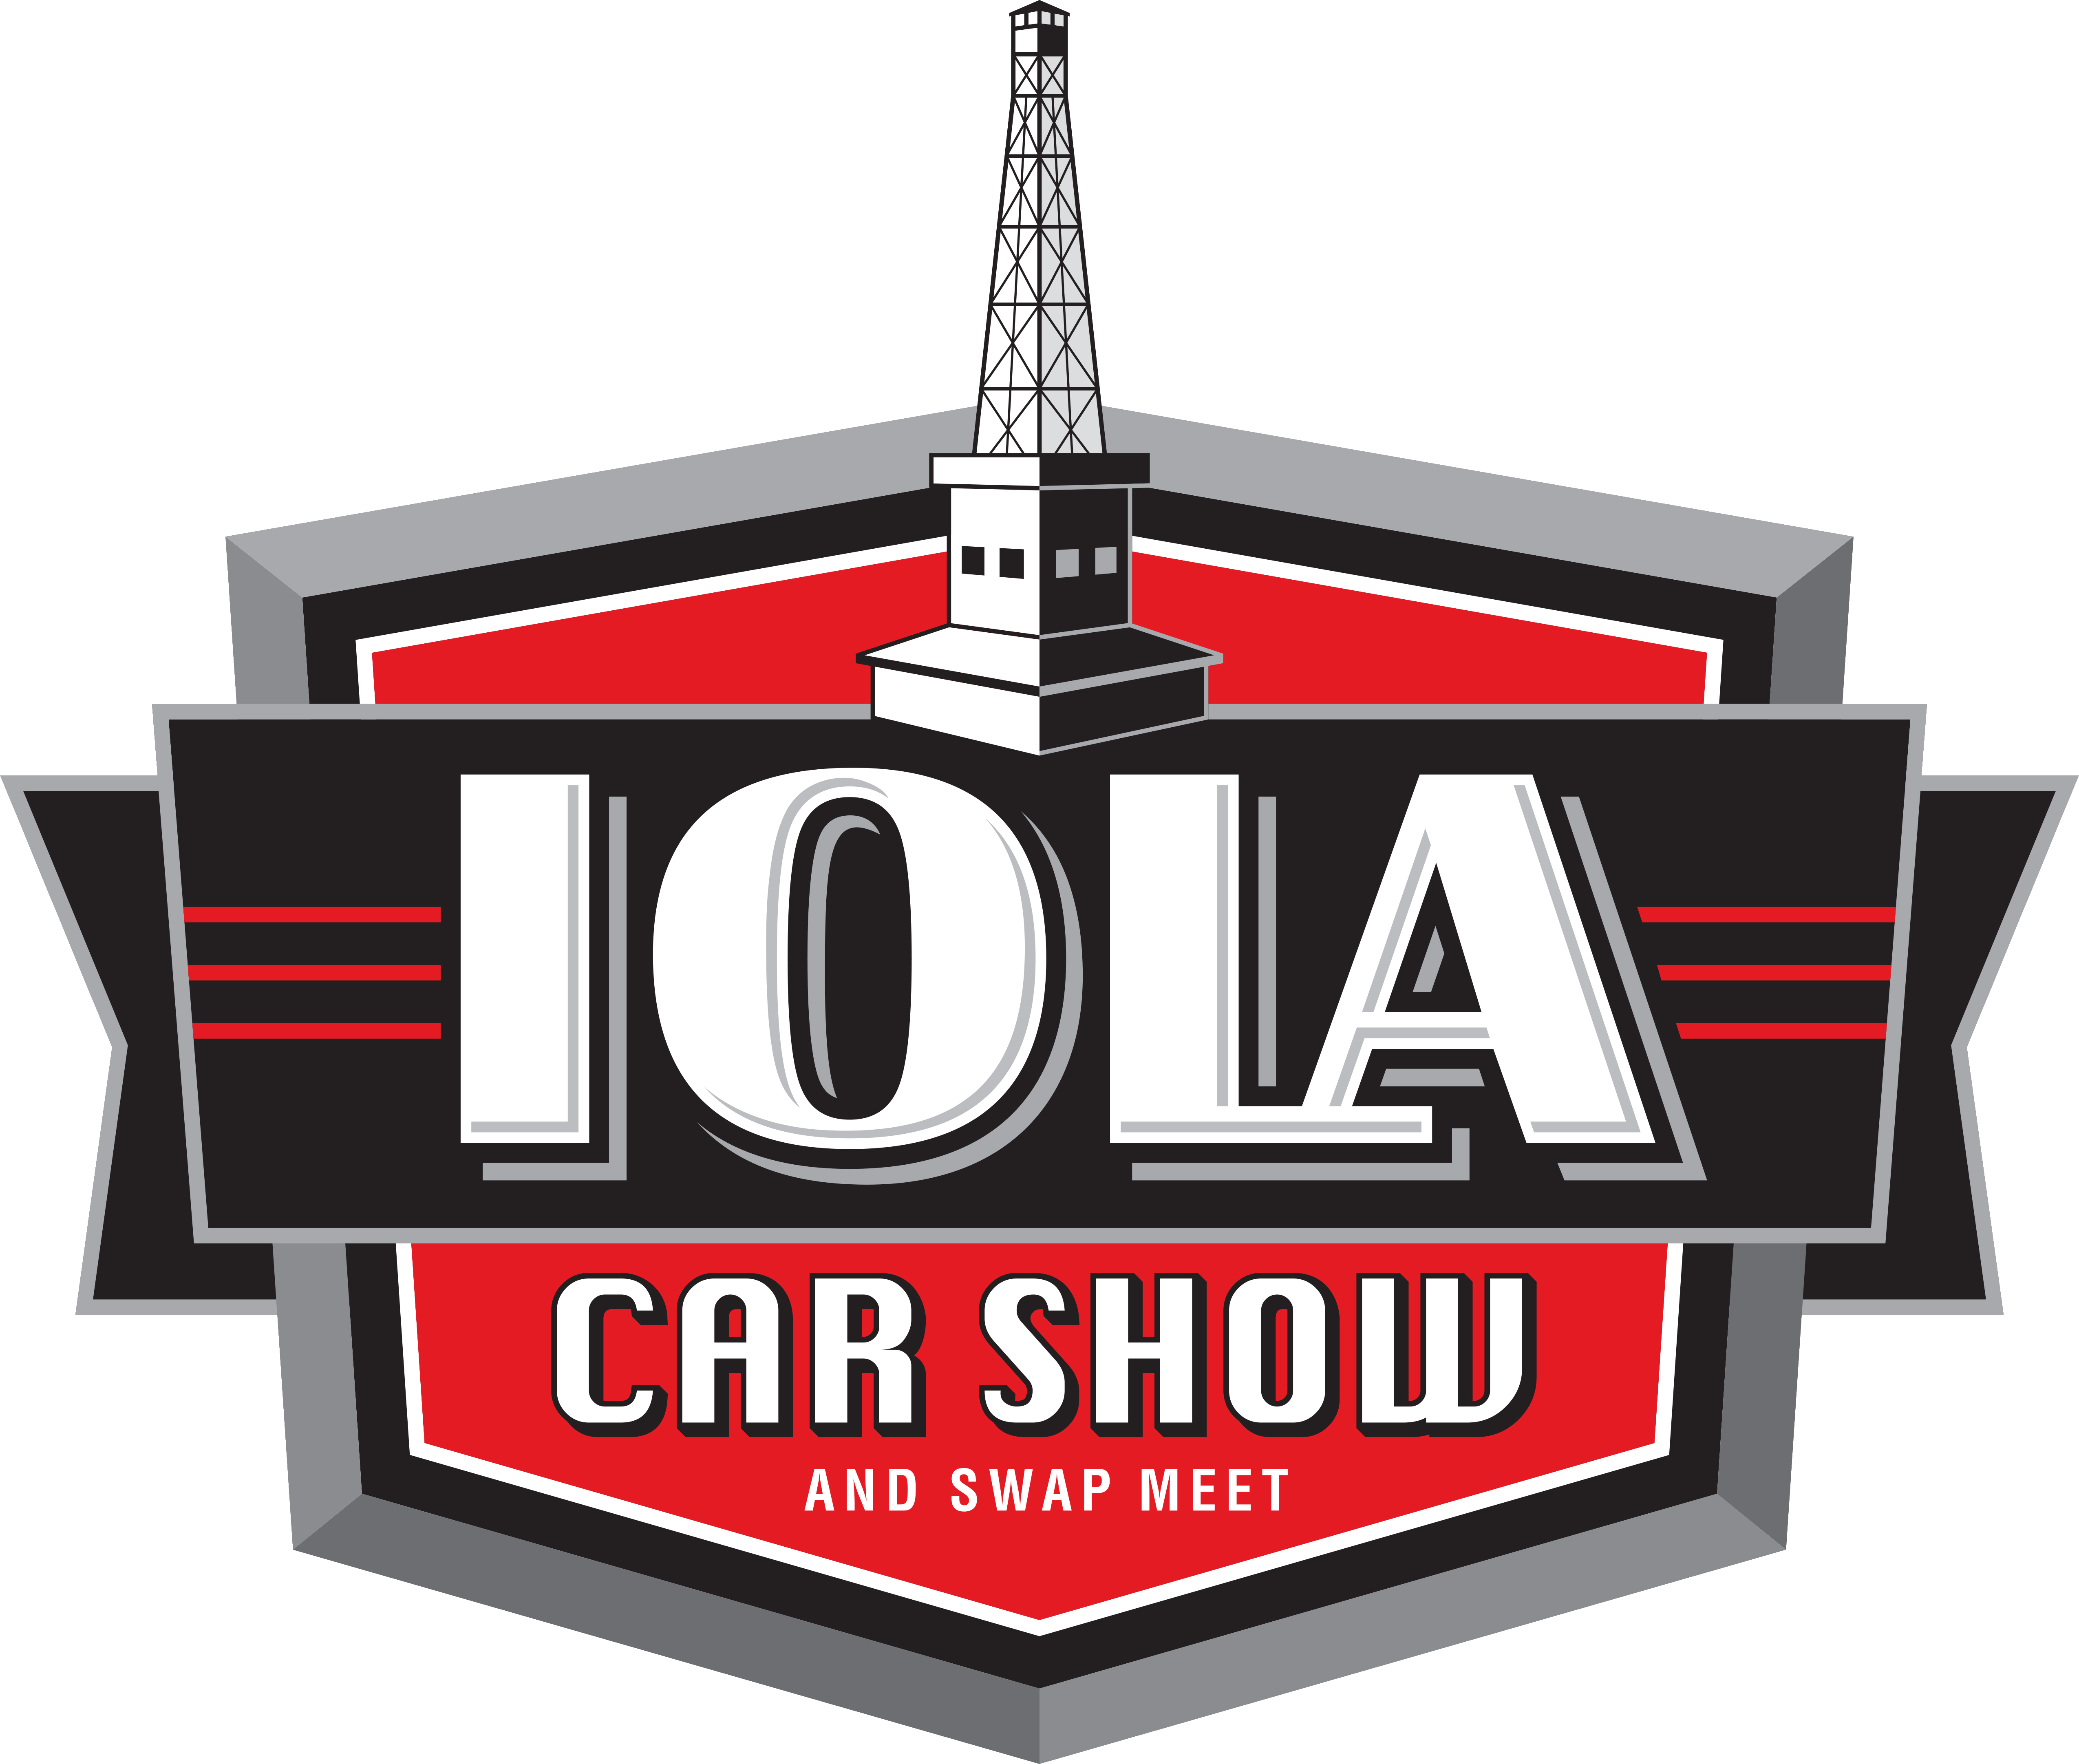 2019-iola-car-show-and-swap-meet